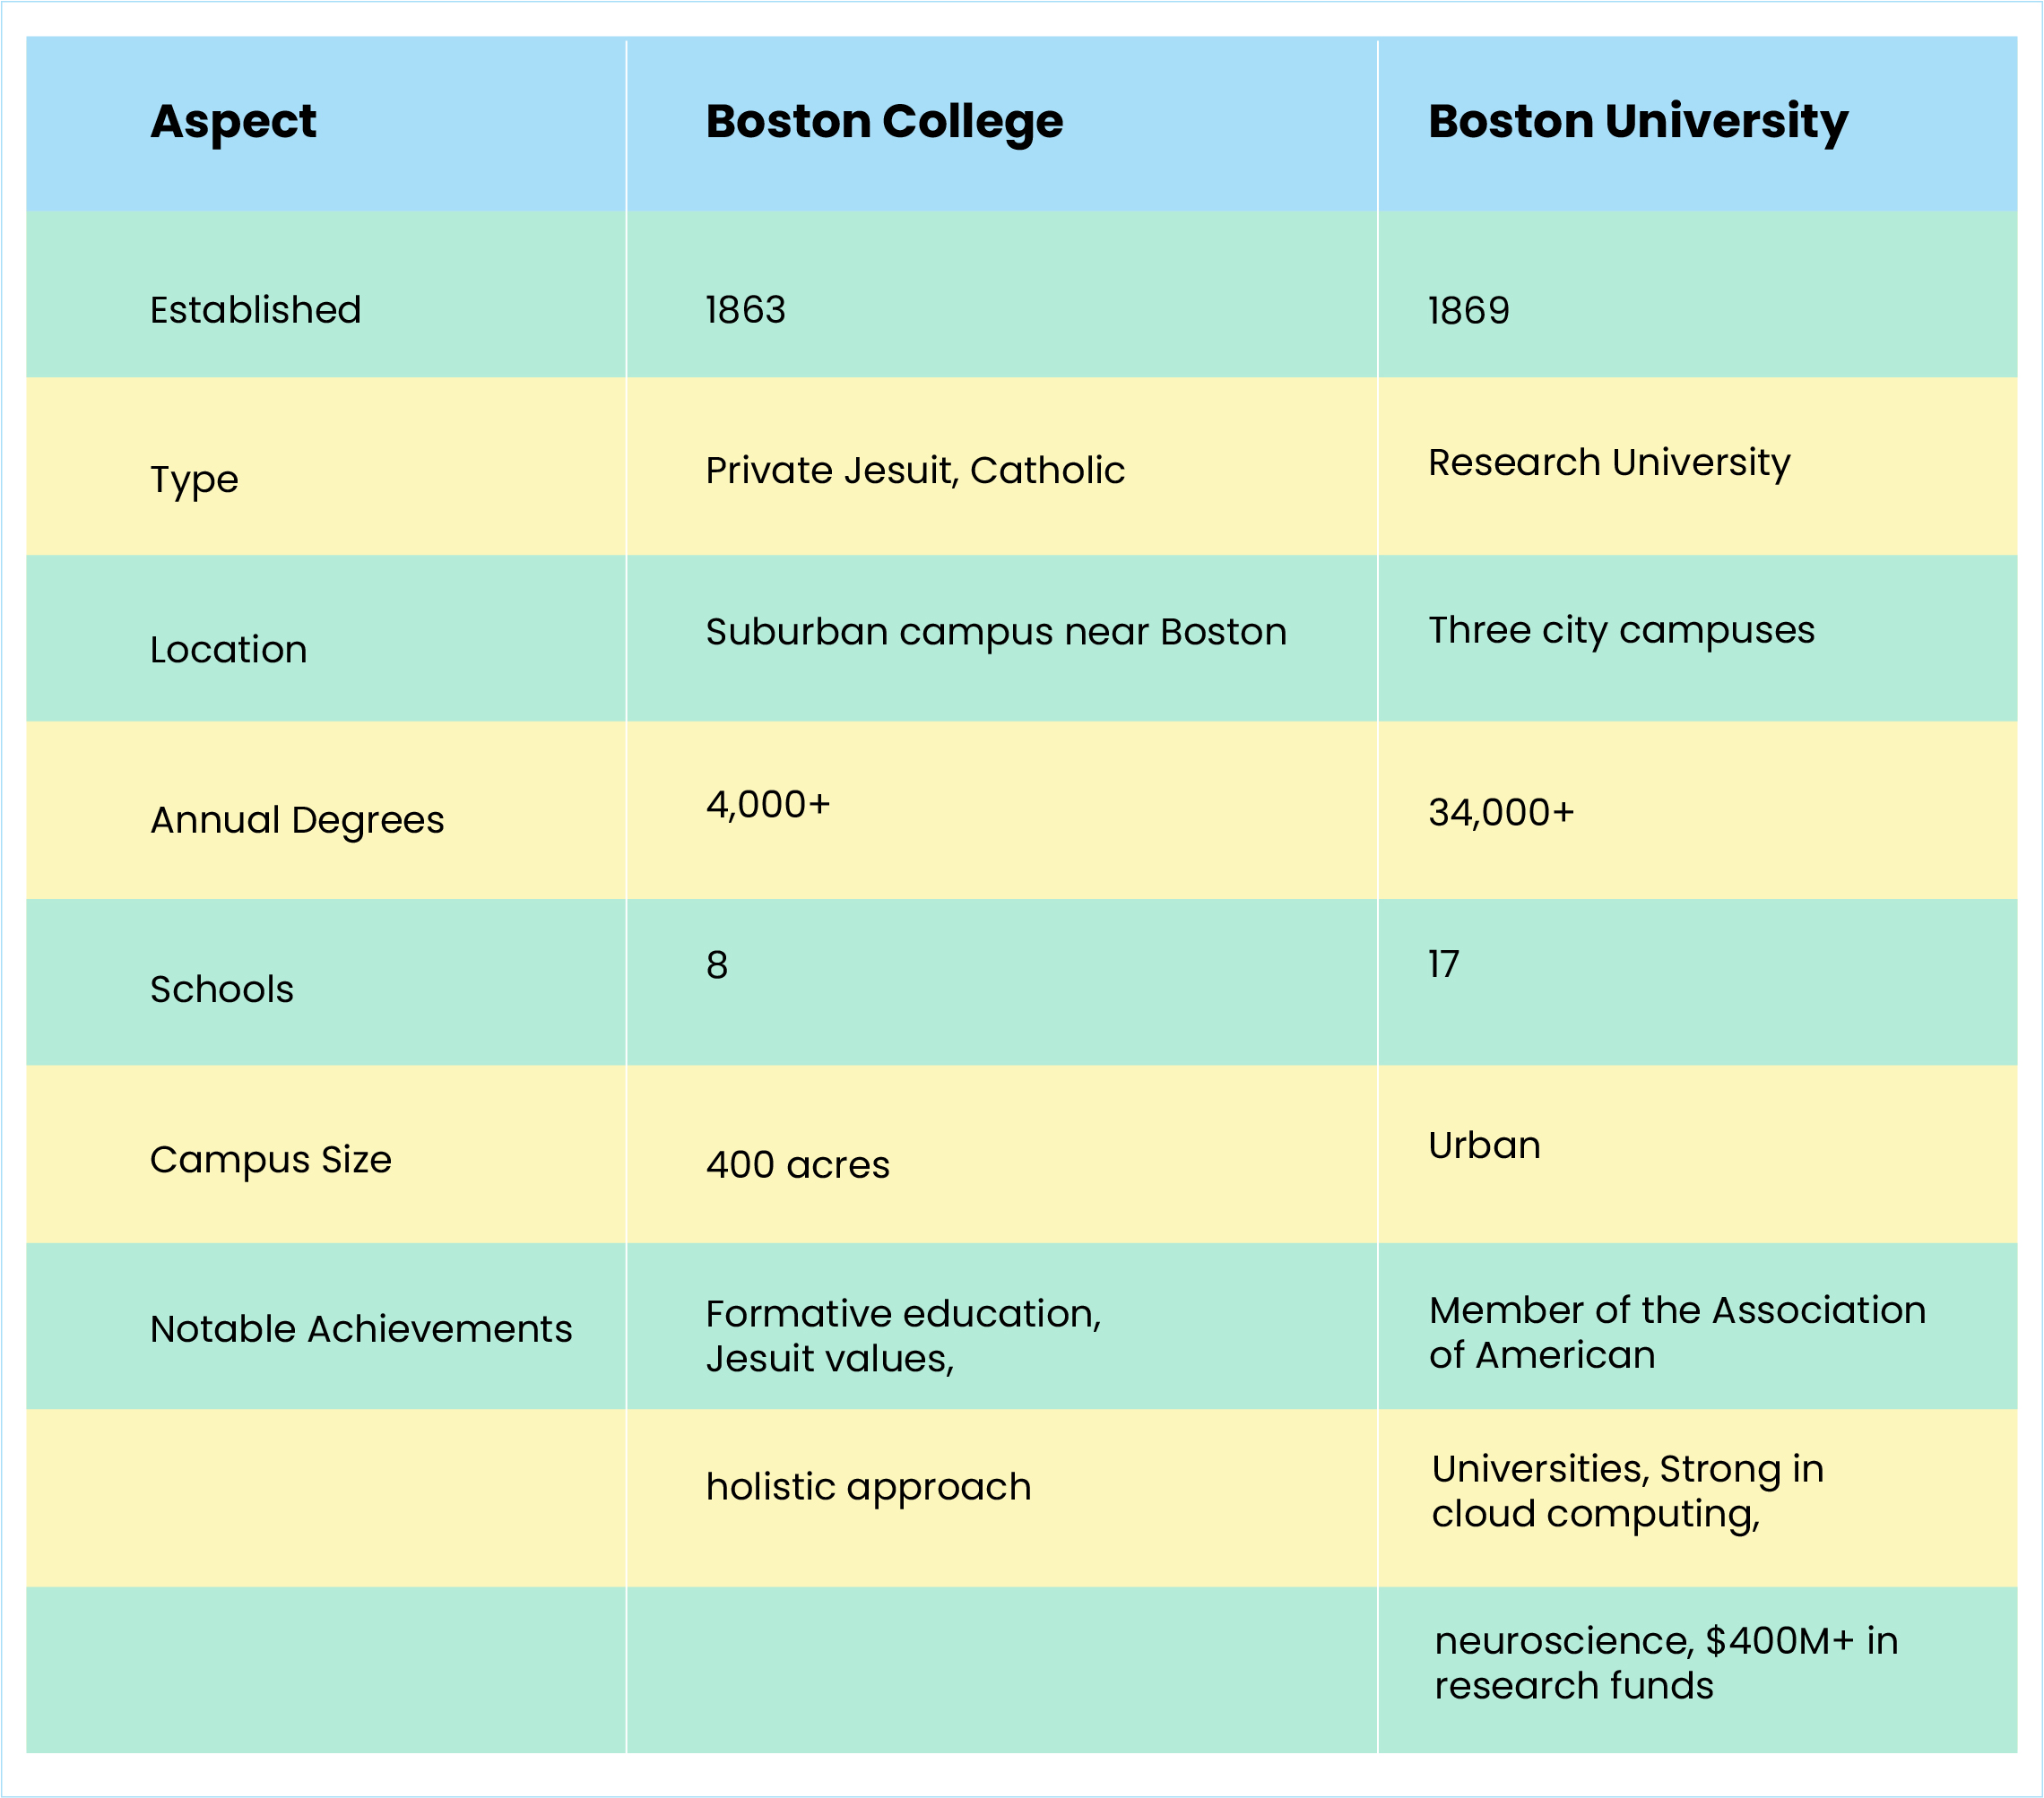 Boston College versus Boston University